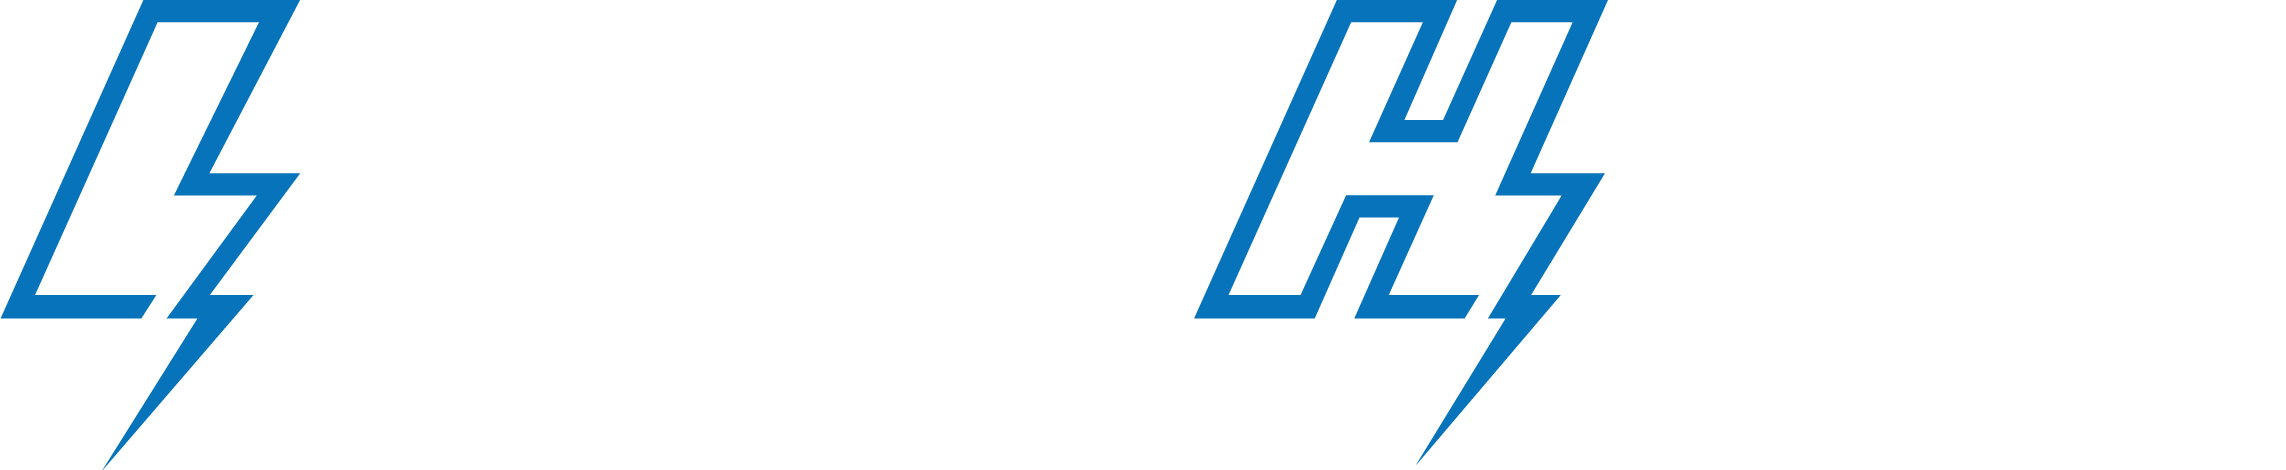 LES-HES Logo